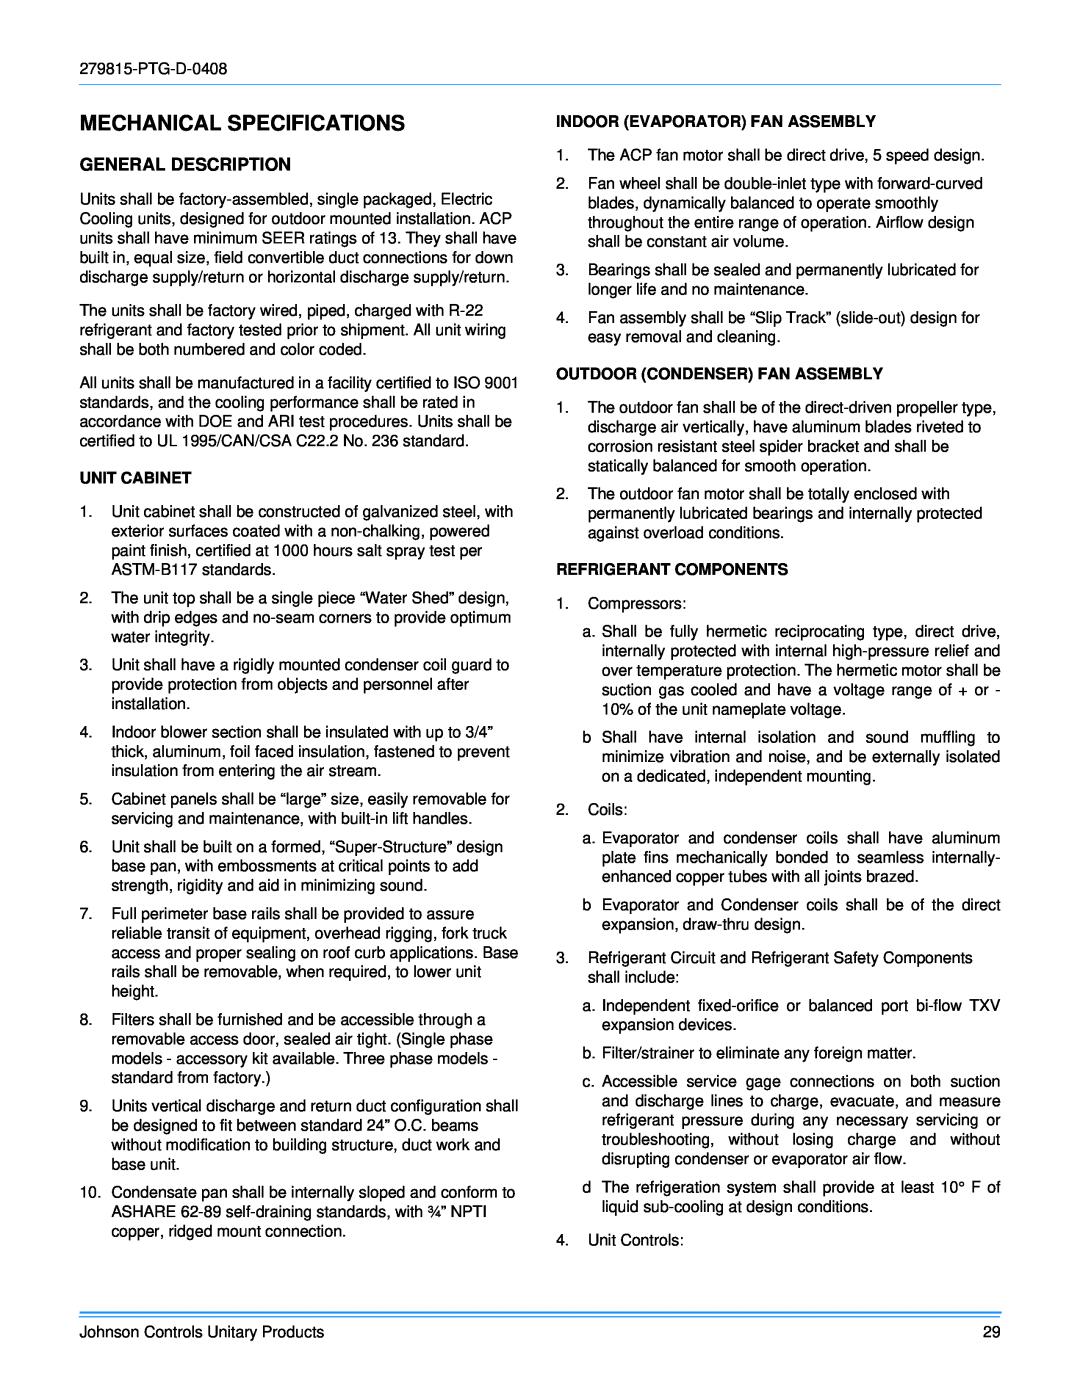 Johnson Controls ACPU024 THRU 060 manual Mechanical Specifications, General Description 